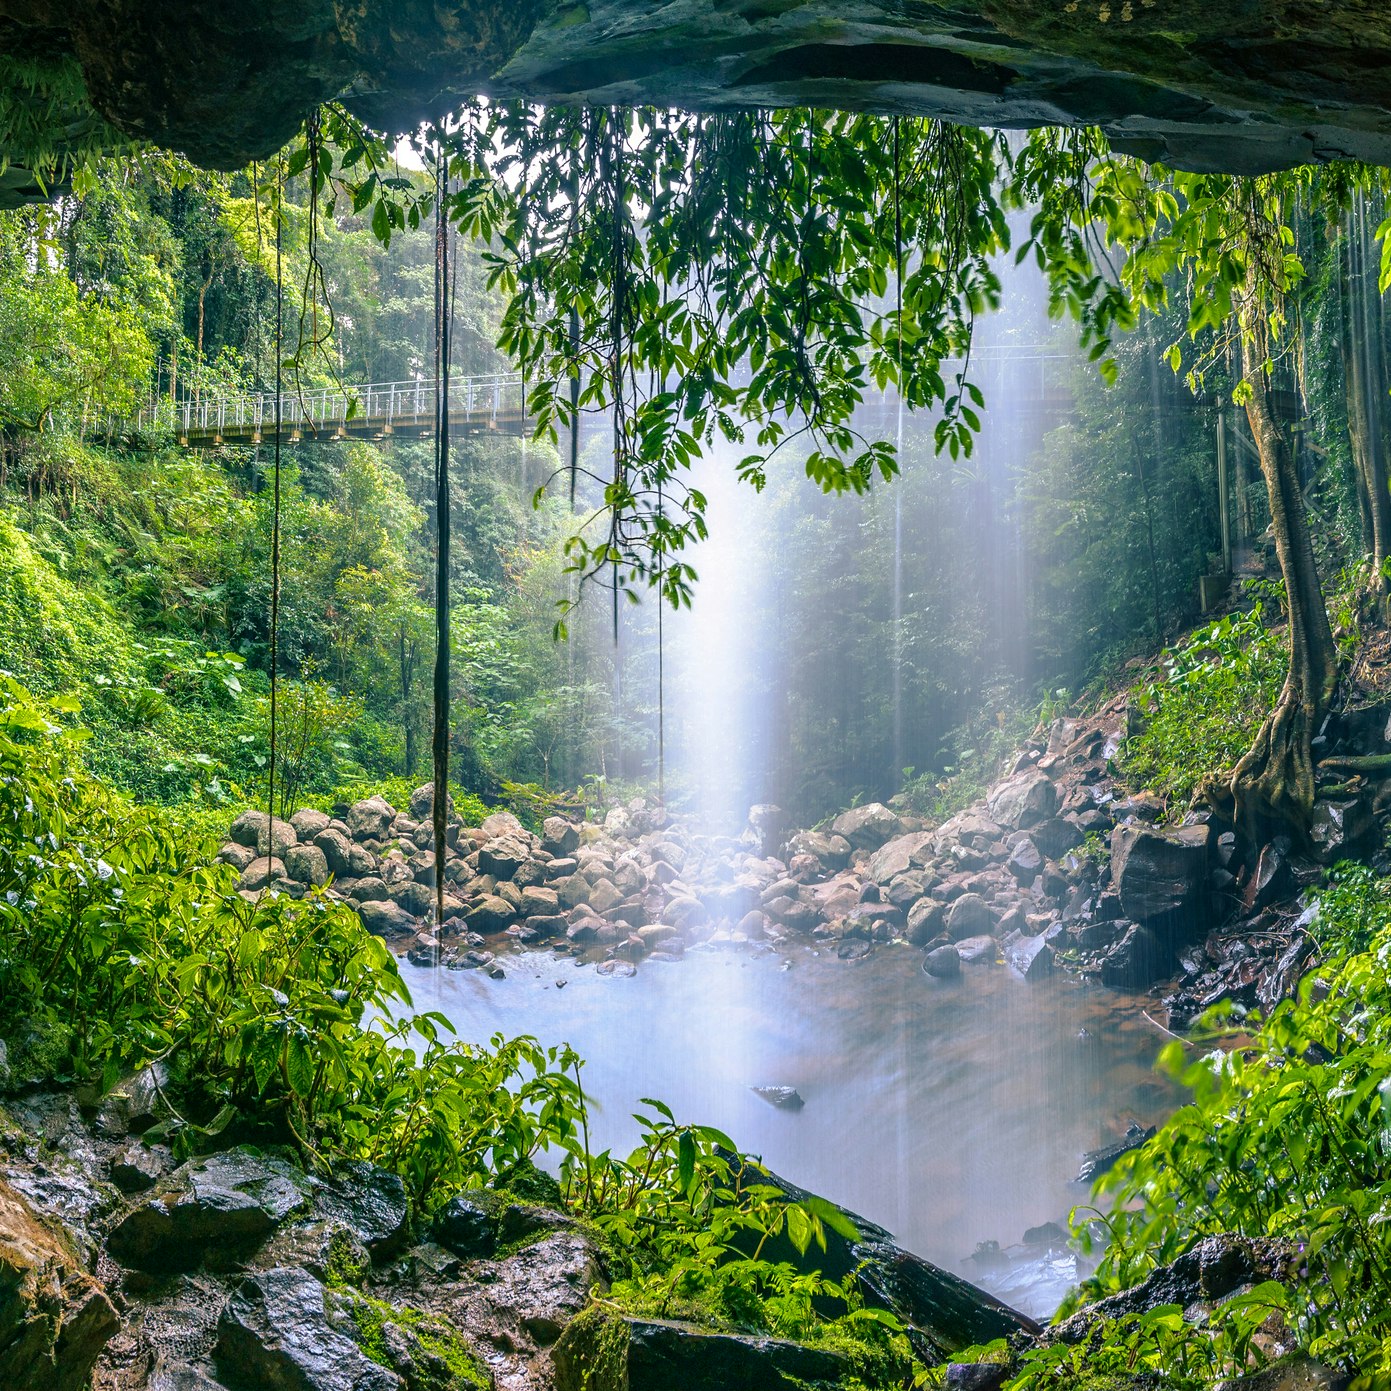 Crystal Shower Falls in Gondwana Rainforest at Dorrigo National Park, New South Wales